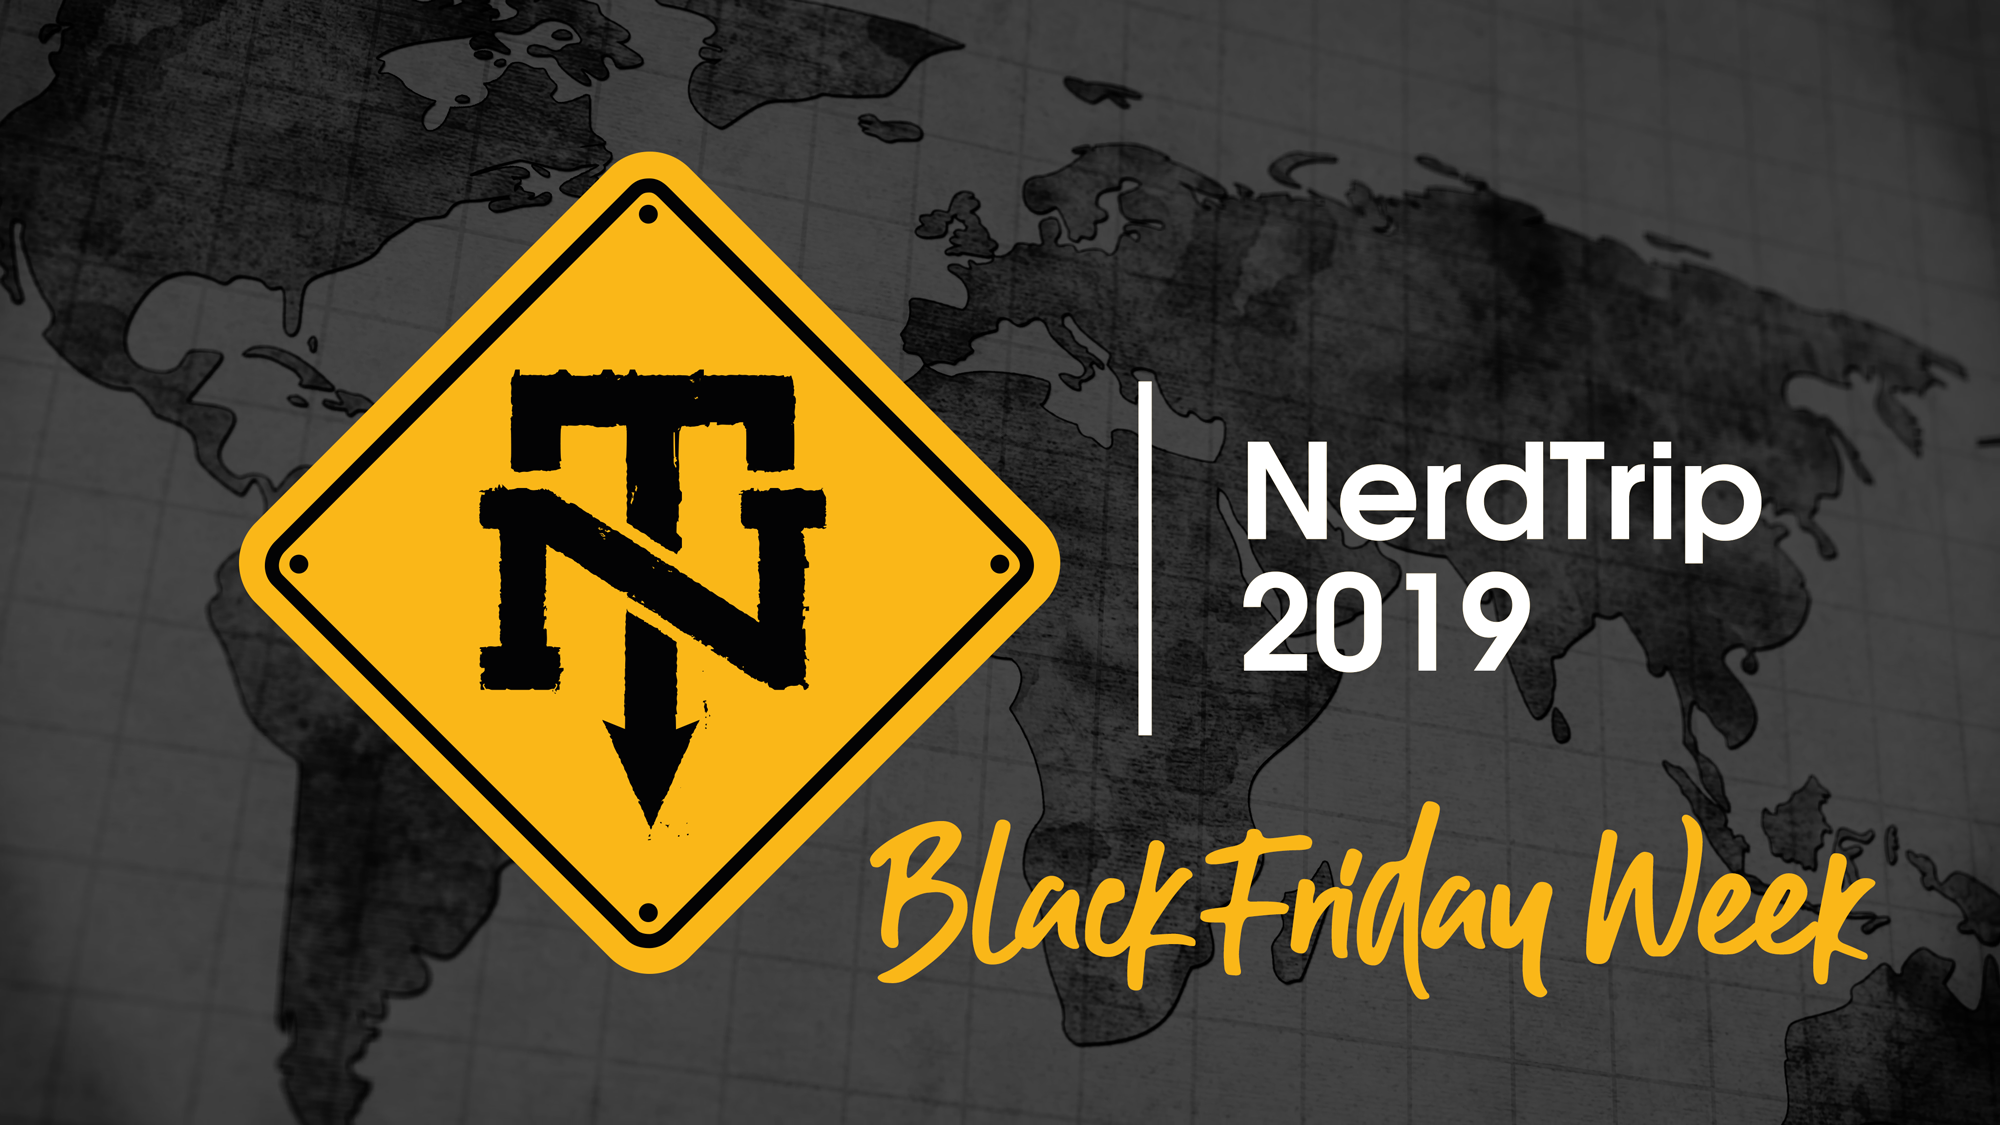 Black Friday Week: tornano in sconto i NerdTrip, viaggi per nerd